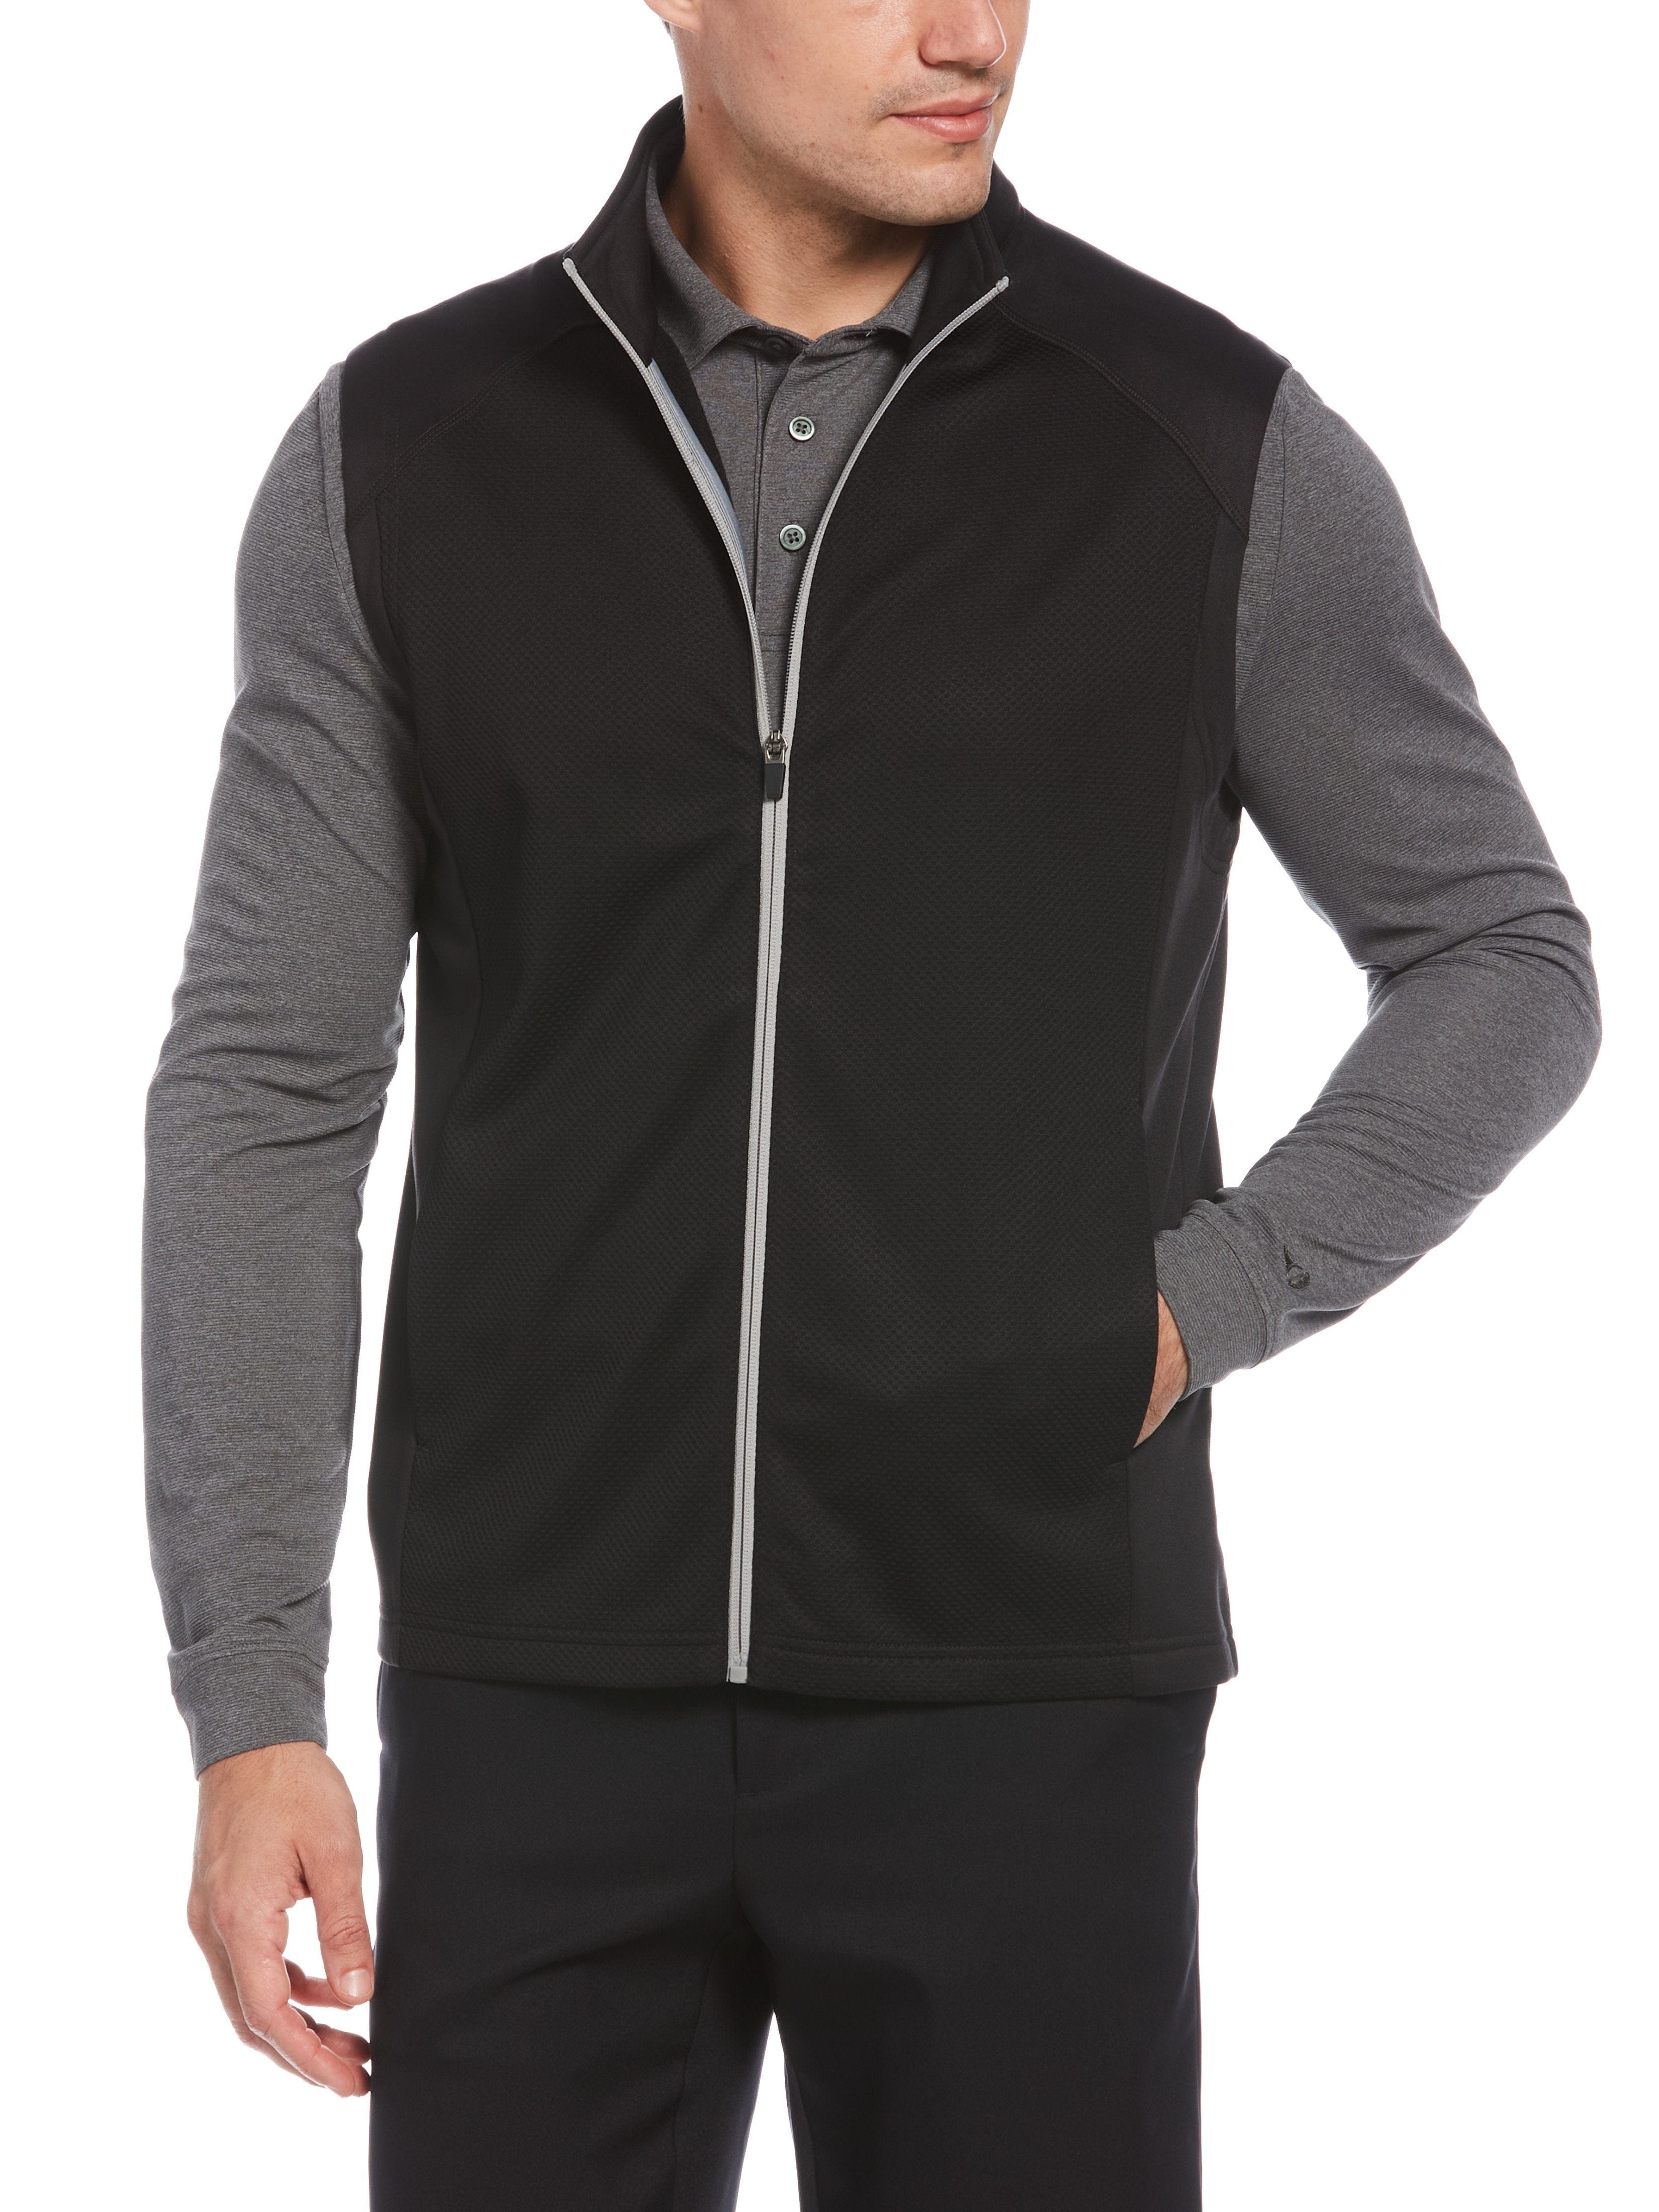 PGA TOUR Apparel Mens Mixed Texture Fleece Golf Vest Top, Size 2XL, Black, 100% Polyester | Golf Apparel Shop